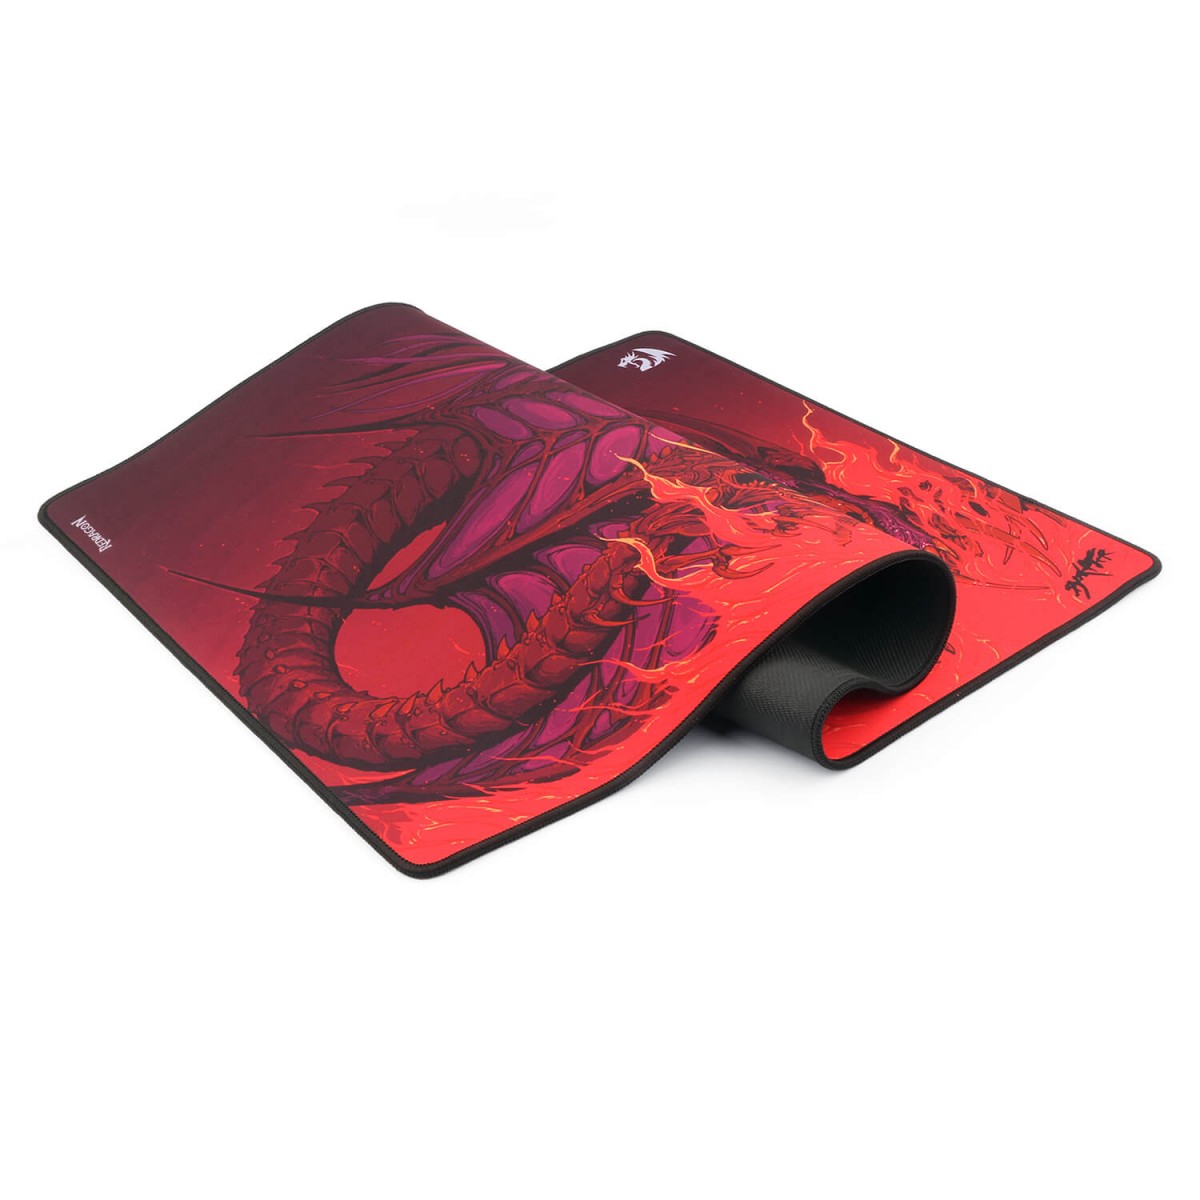 Mousepad Gamer ReDragon Infernal Dragon Seiryu, 880x420mm, ID006